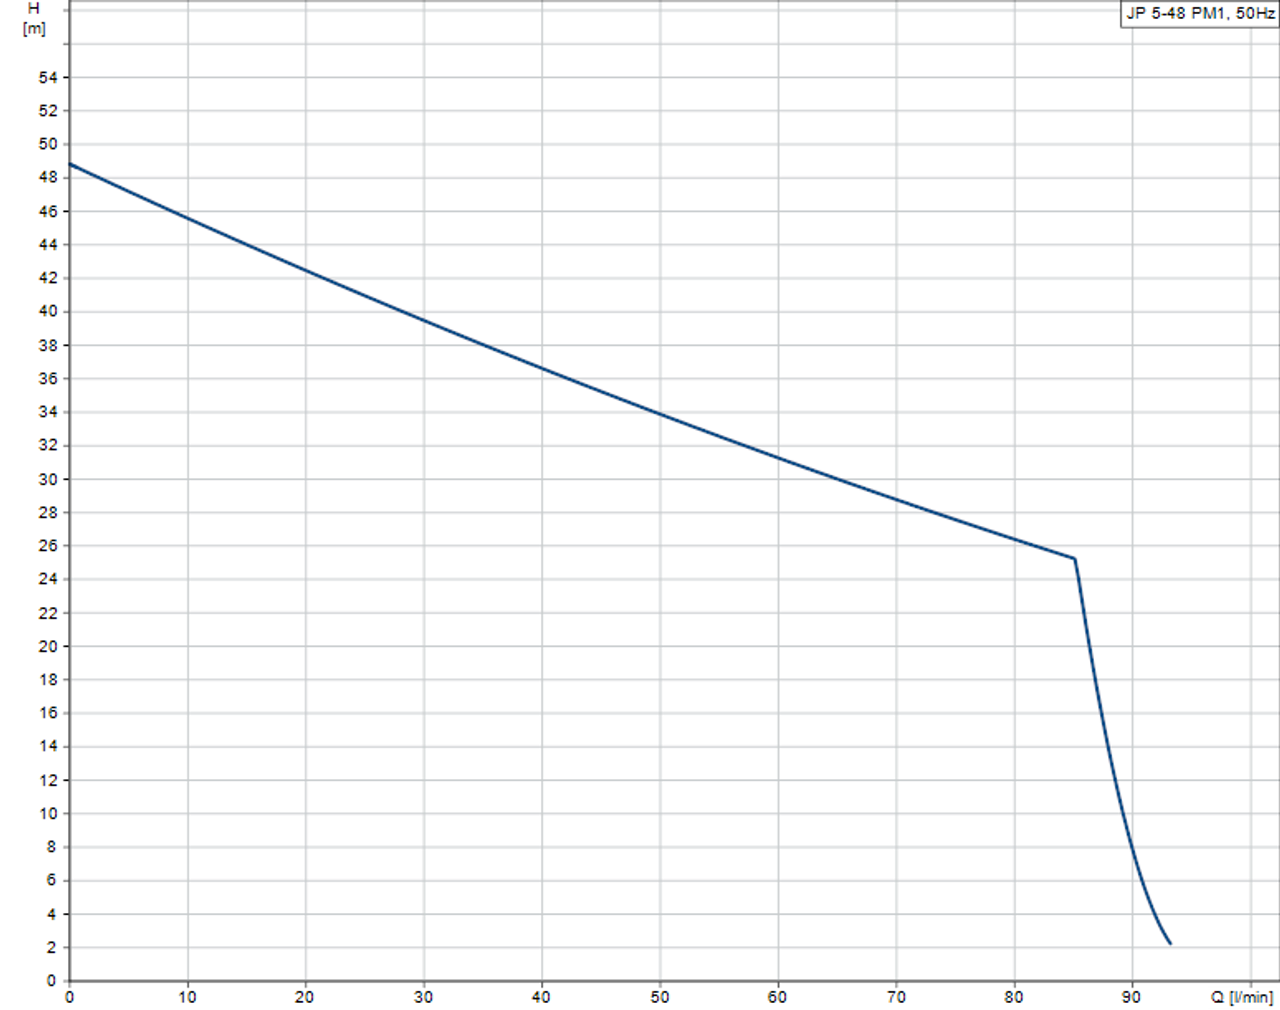 JP 5-48 PM1 Performance Curve